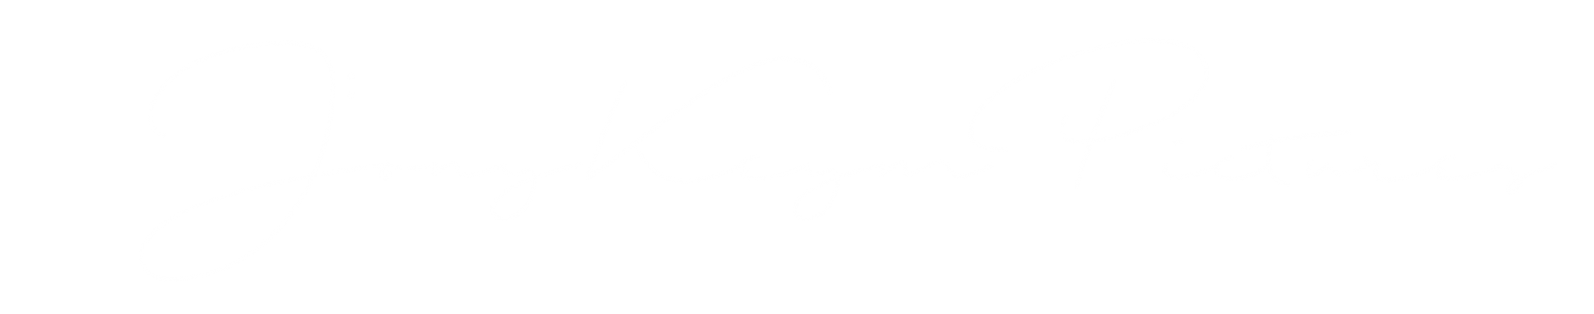 JonyKeym Pictures Logo Signature Blanc